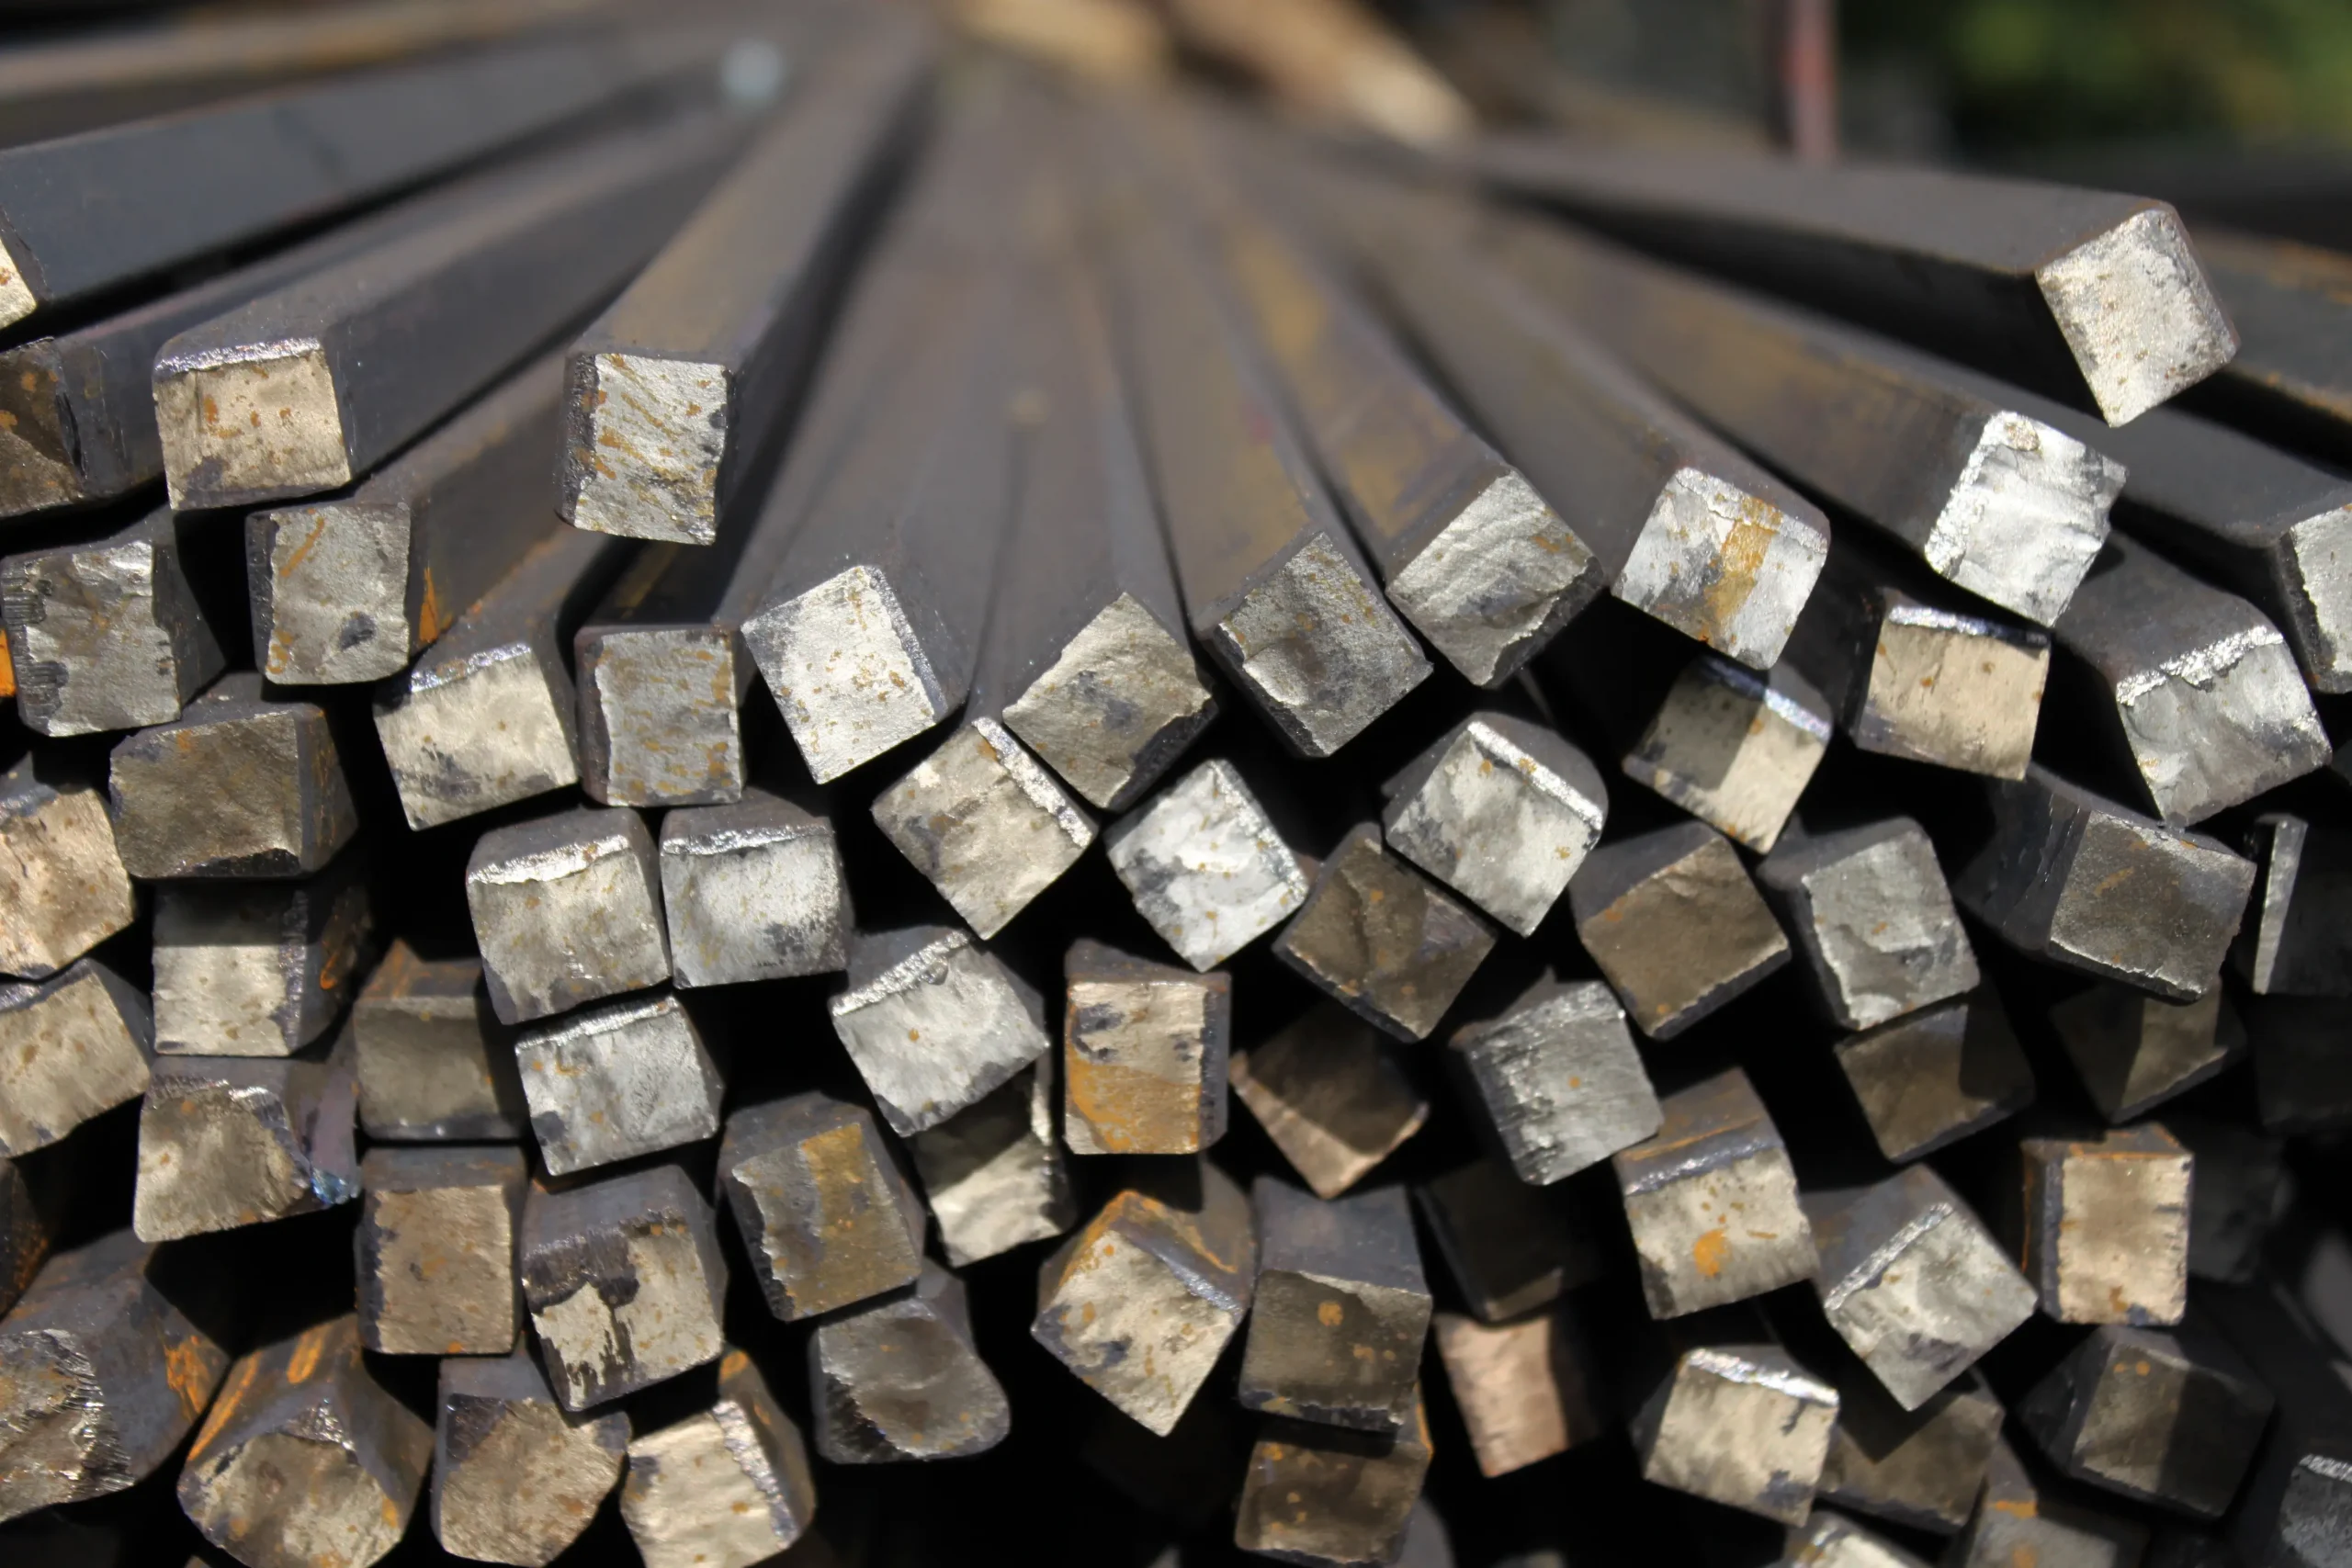 Carbon Steel Production